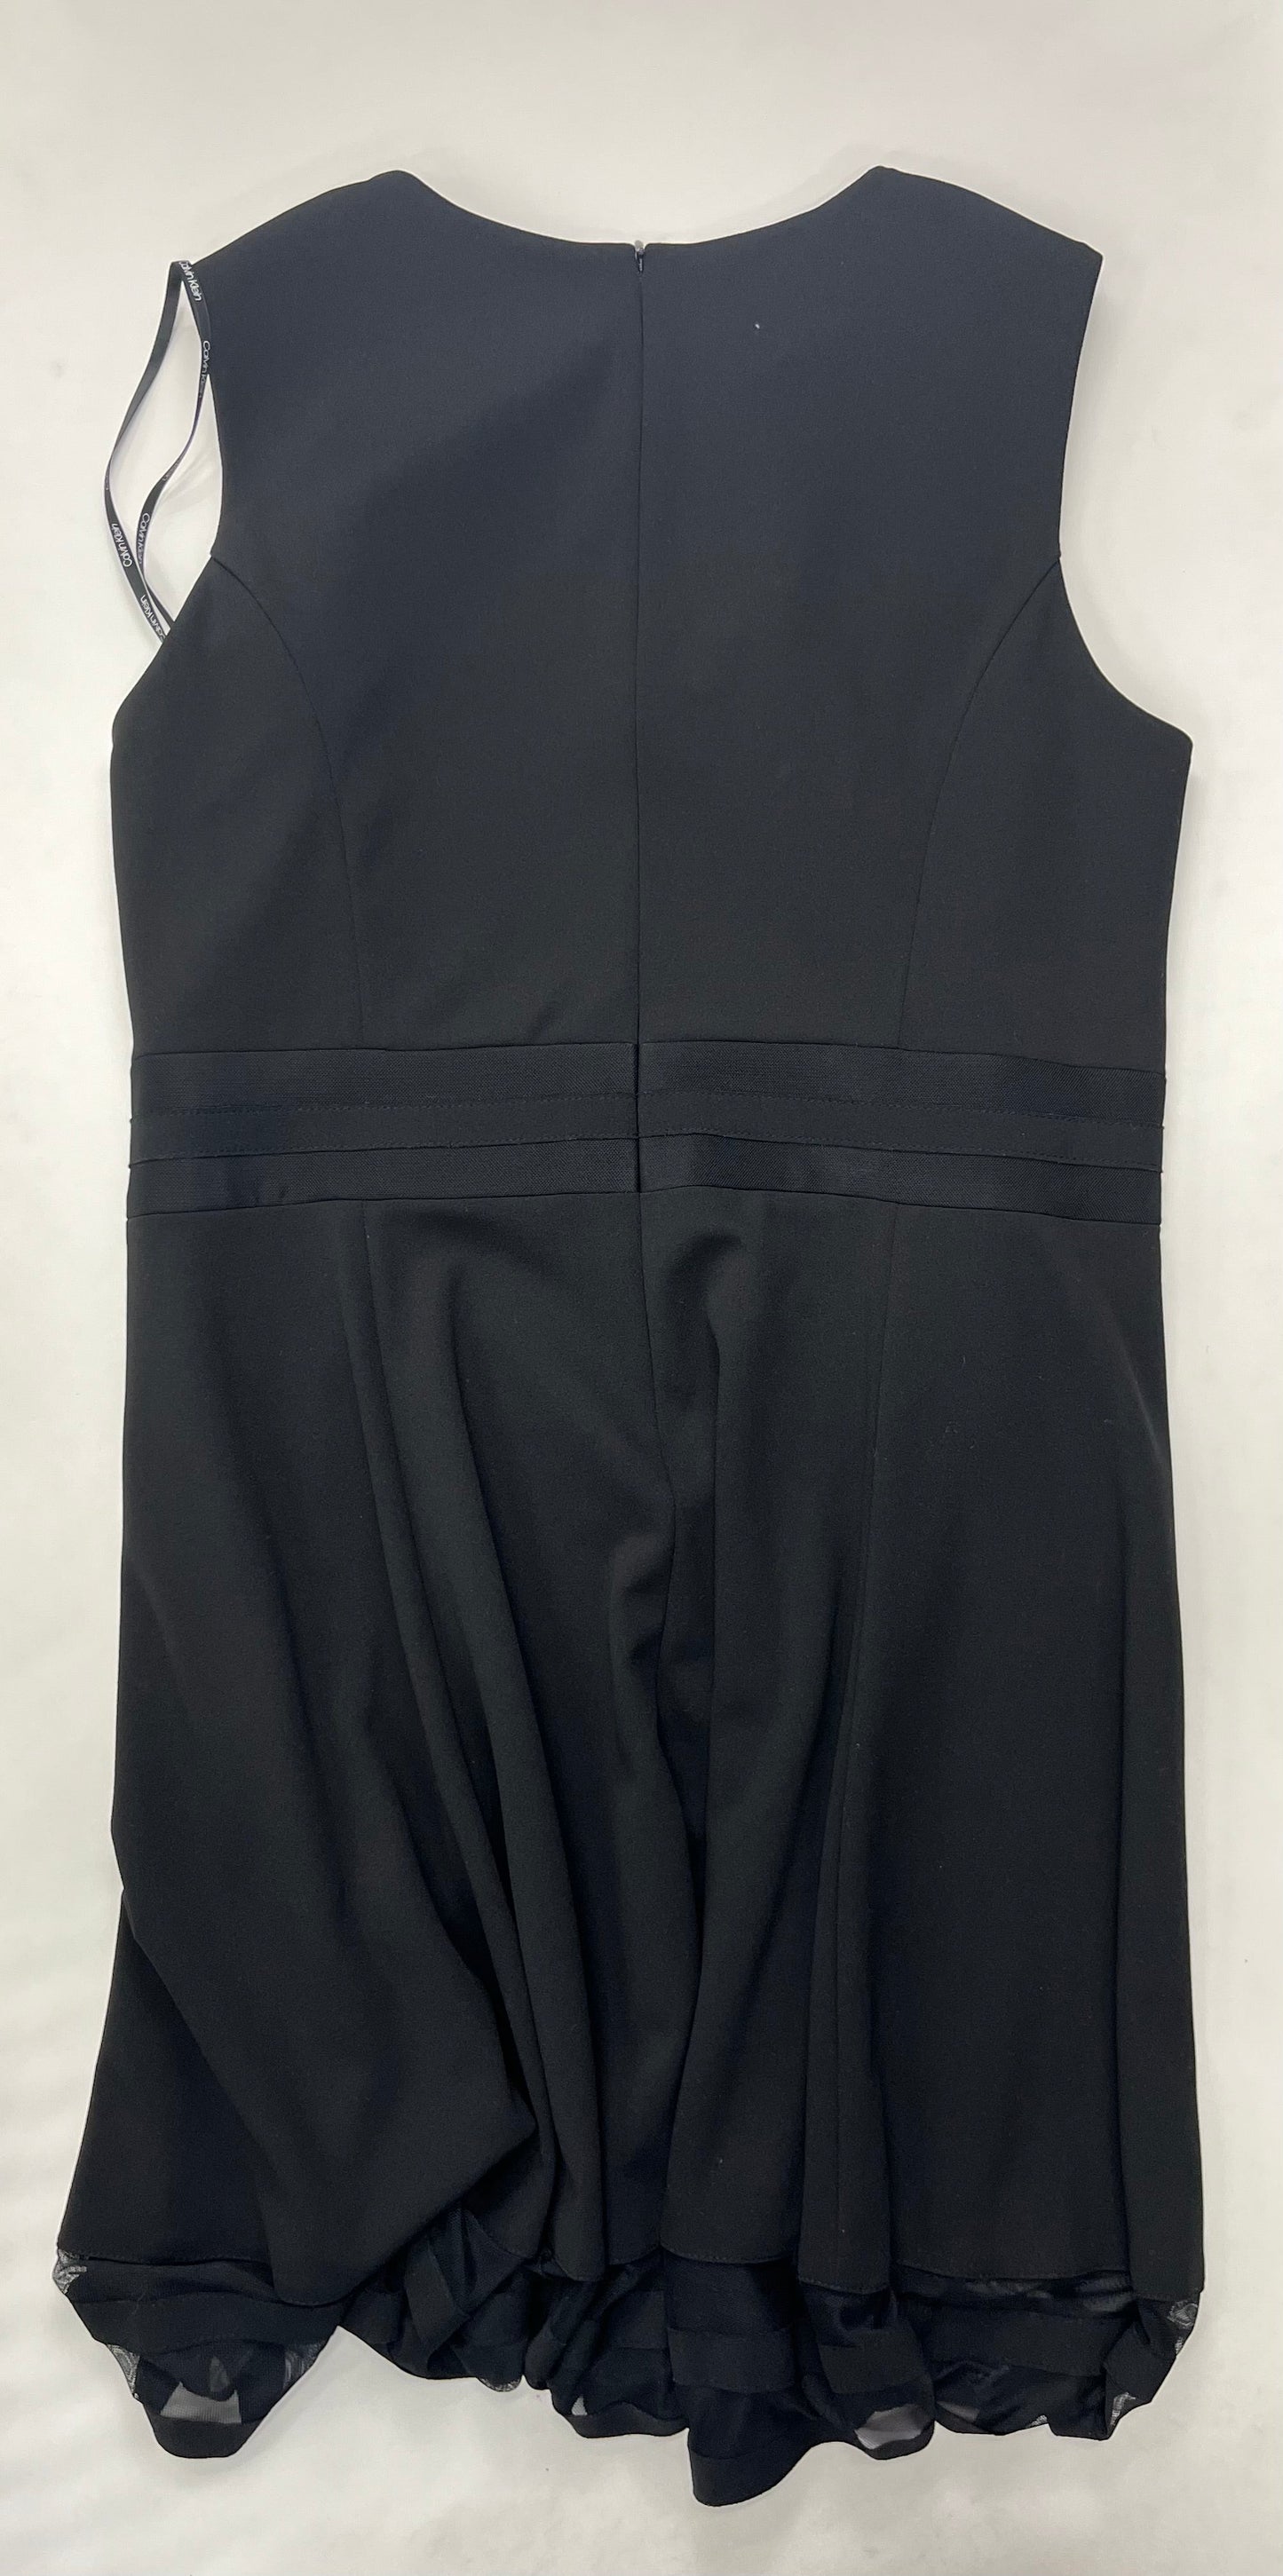 Black Dress Work Calvin Klein NWT, Size 1x